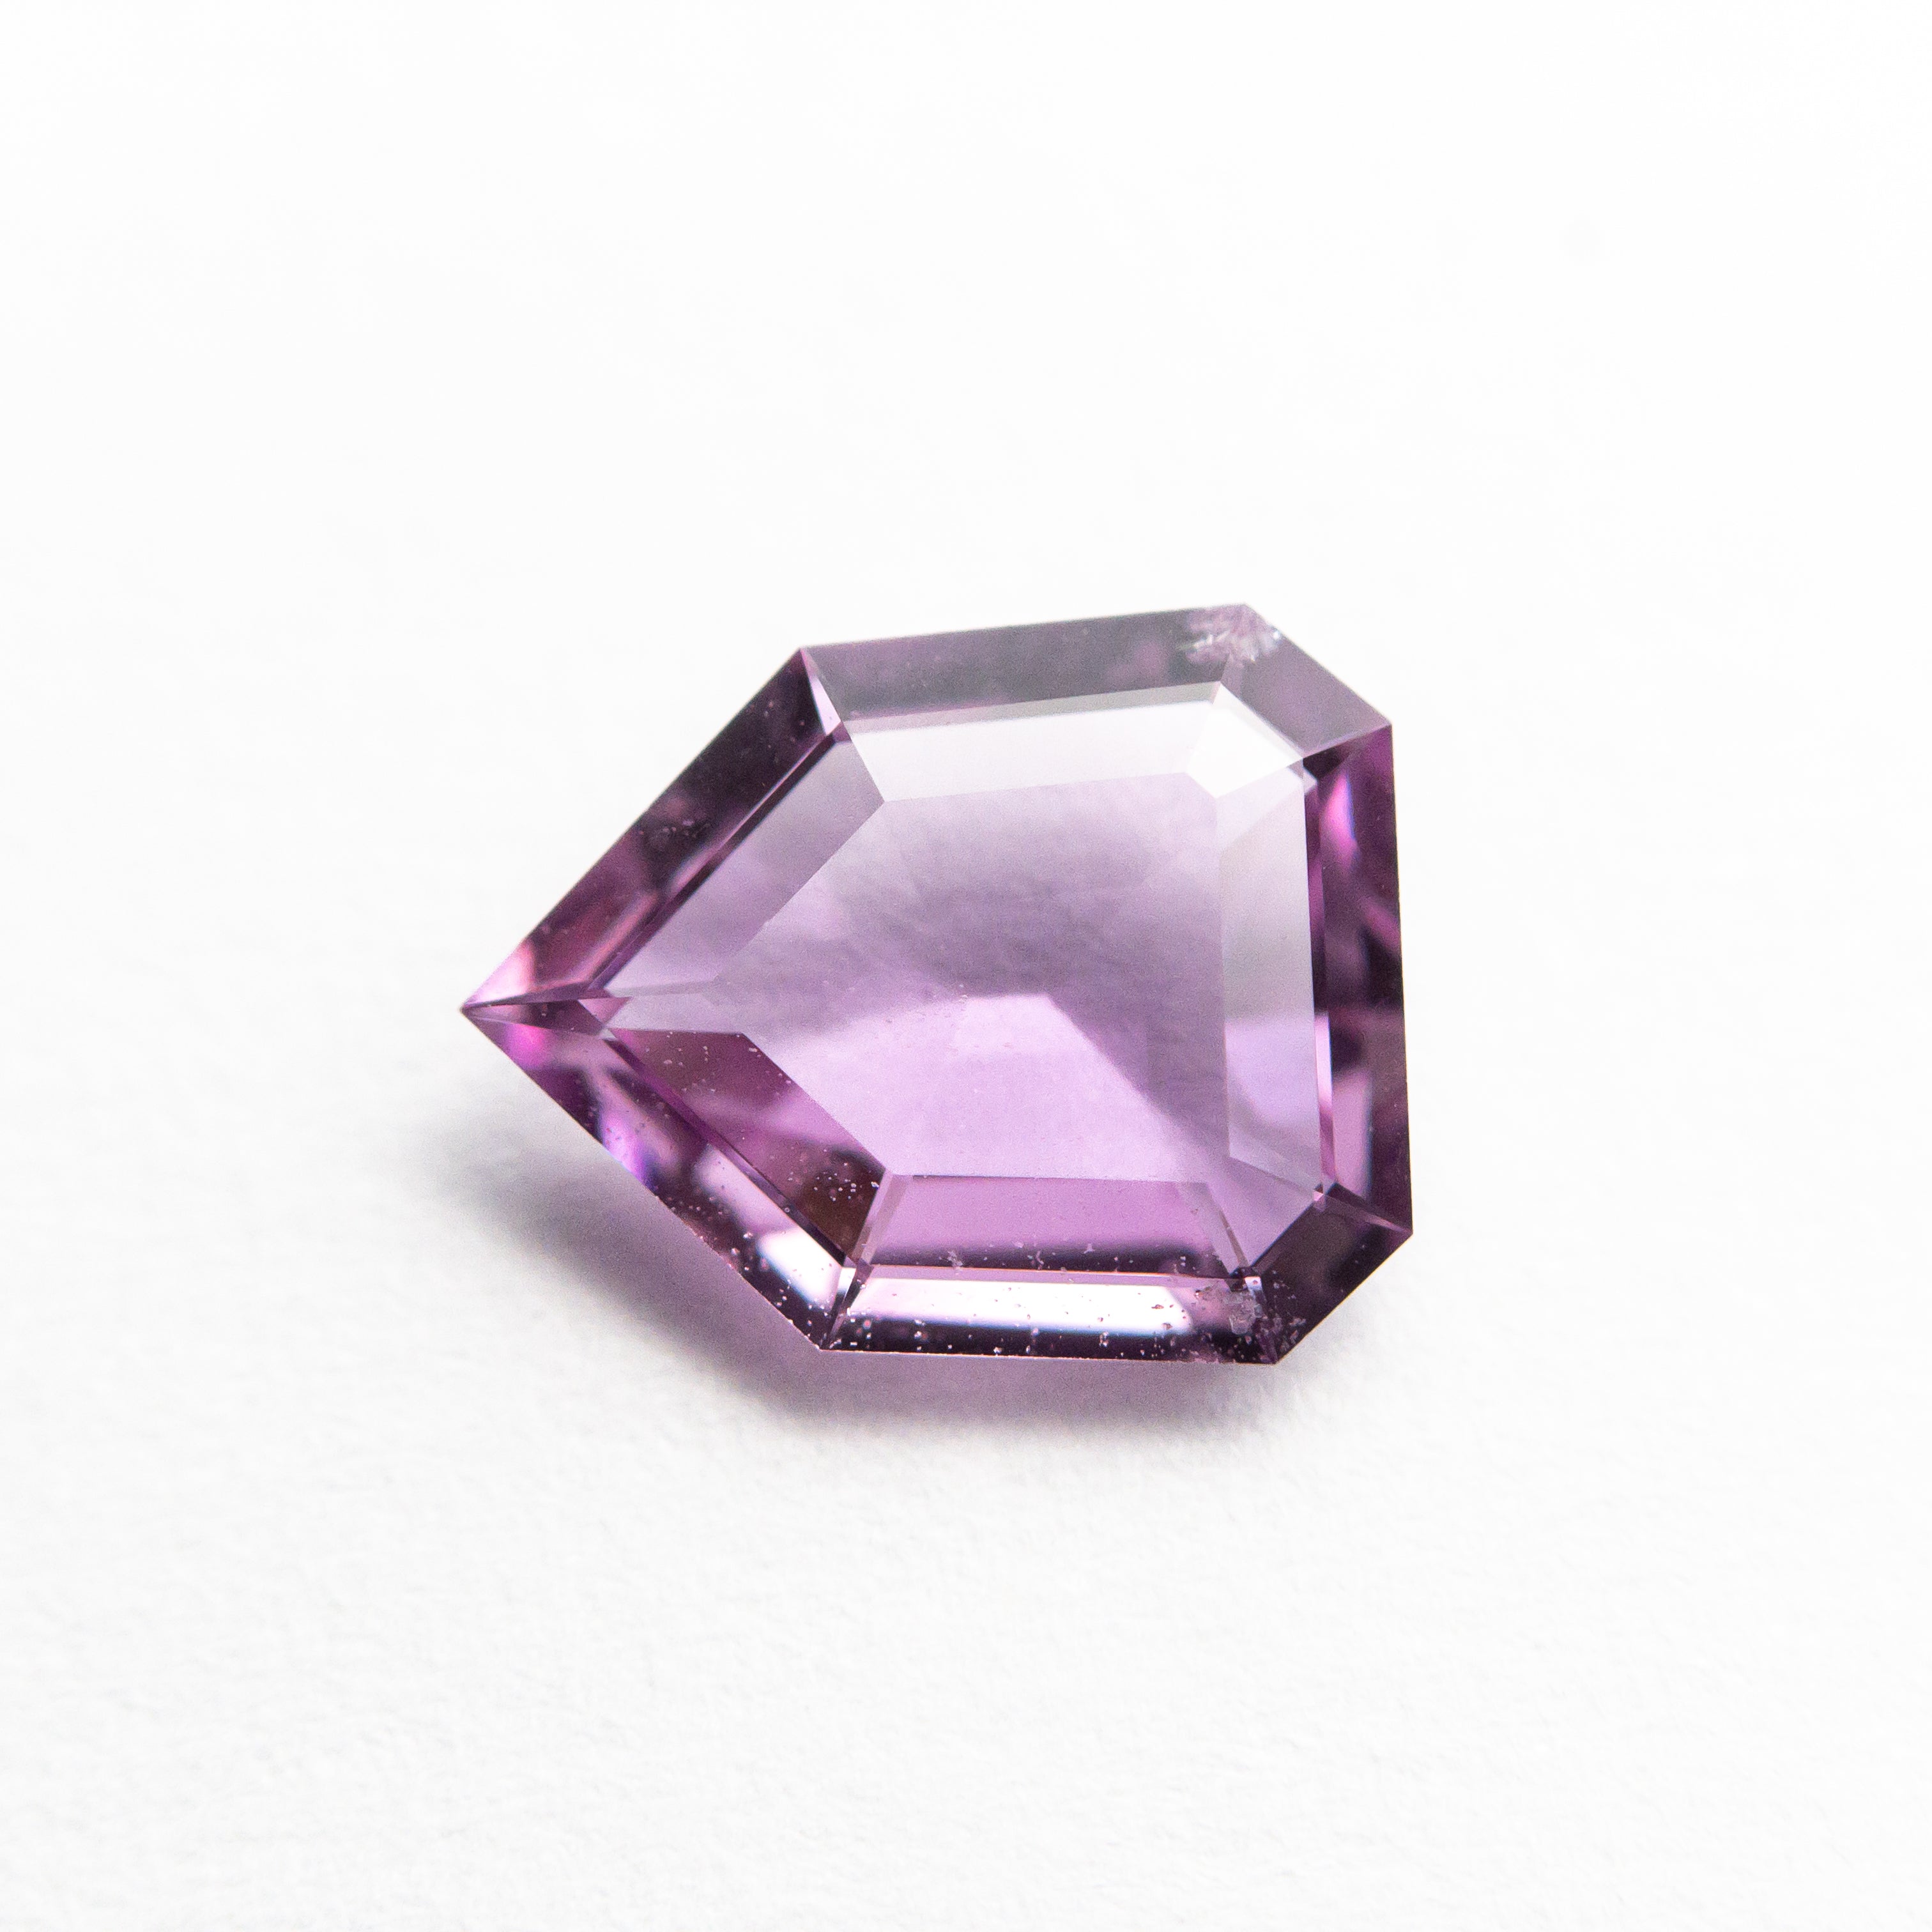 12th HOUSE loose gemstone 1.09ct Pink shield step cut sapphire